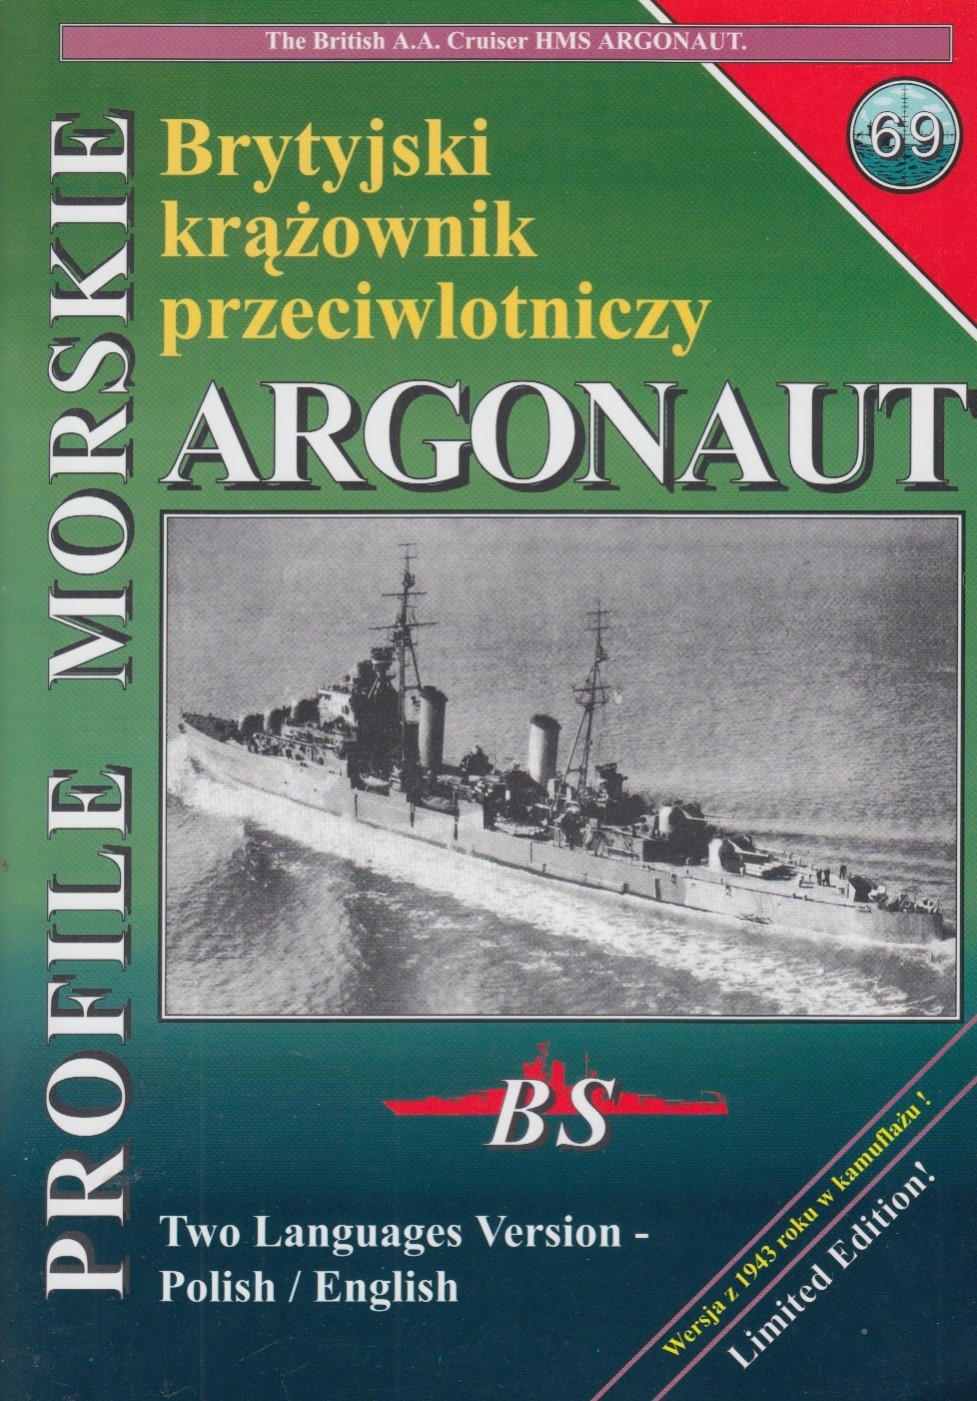 AA cruiser HMS ARGONAUT